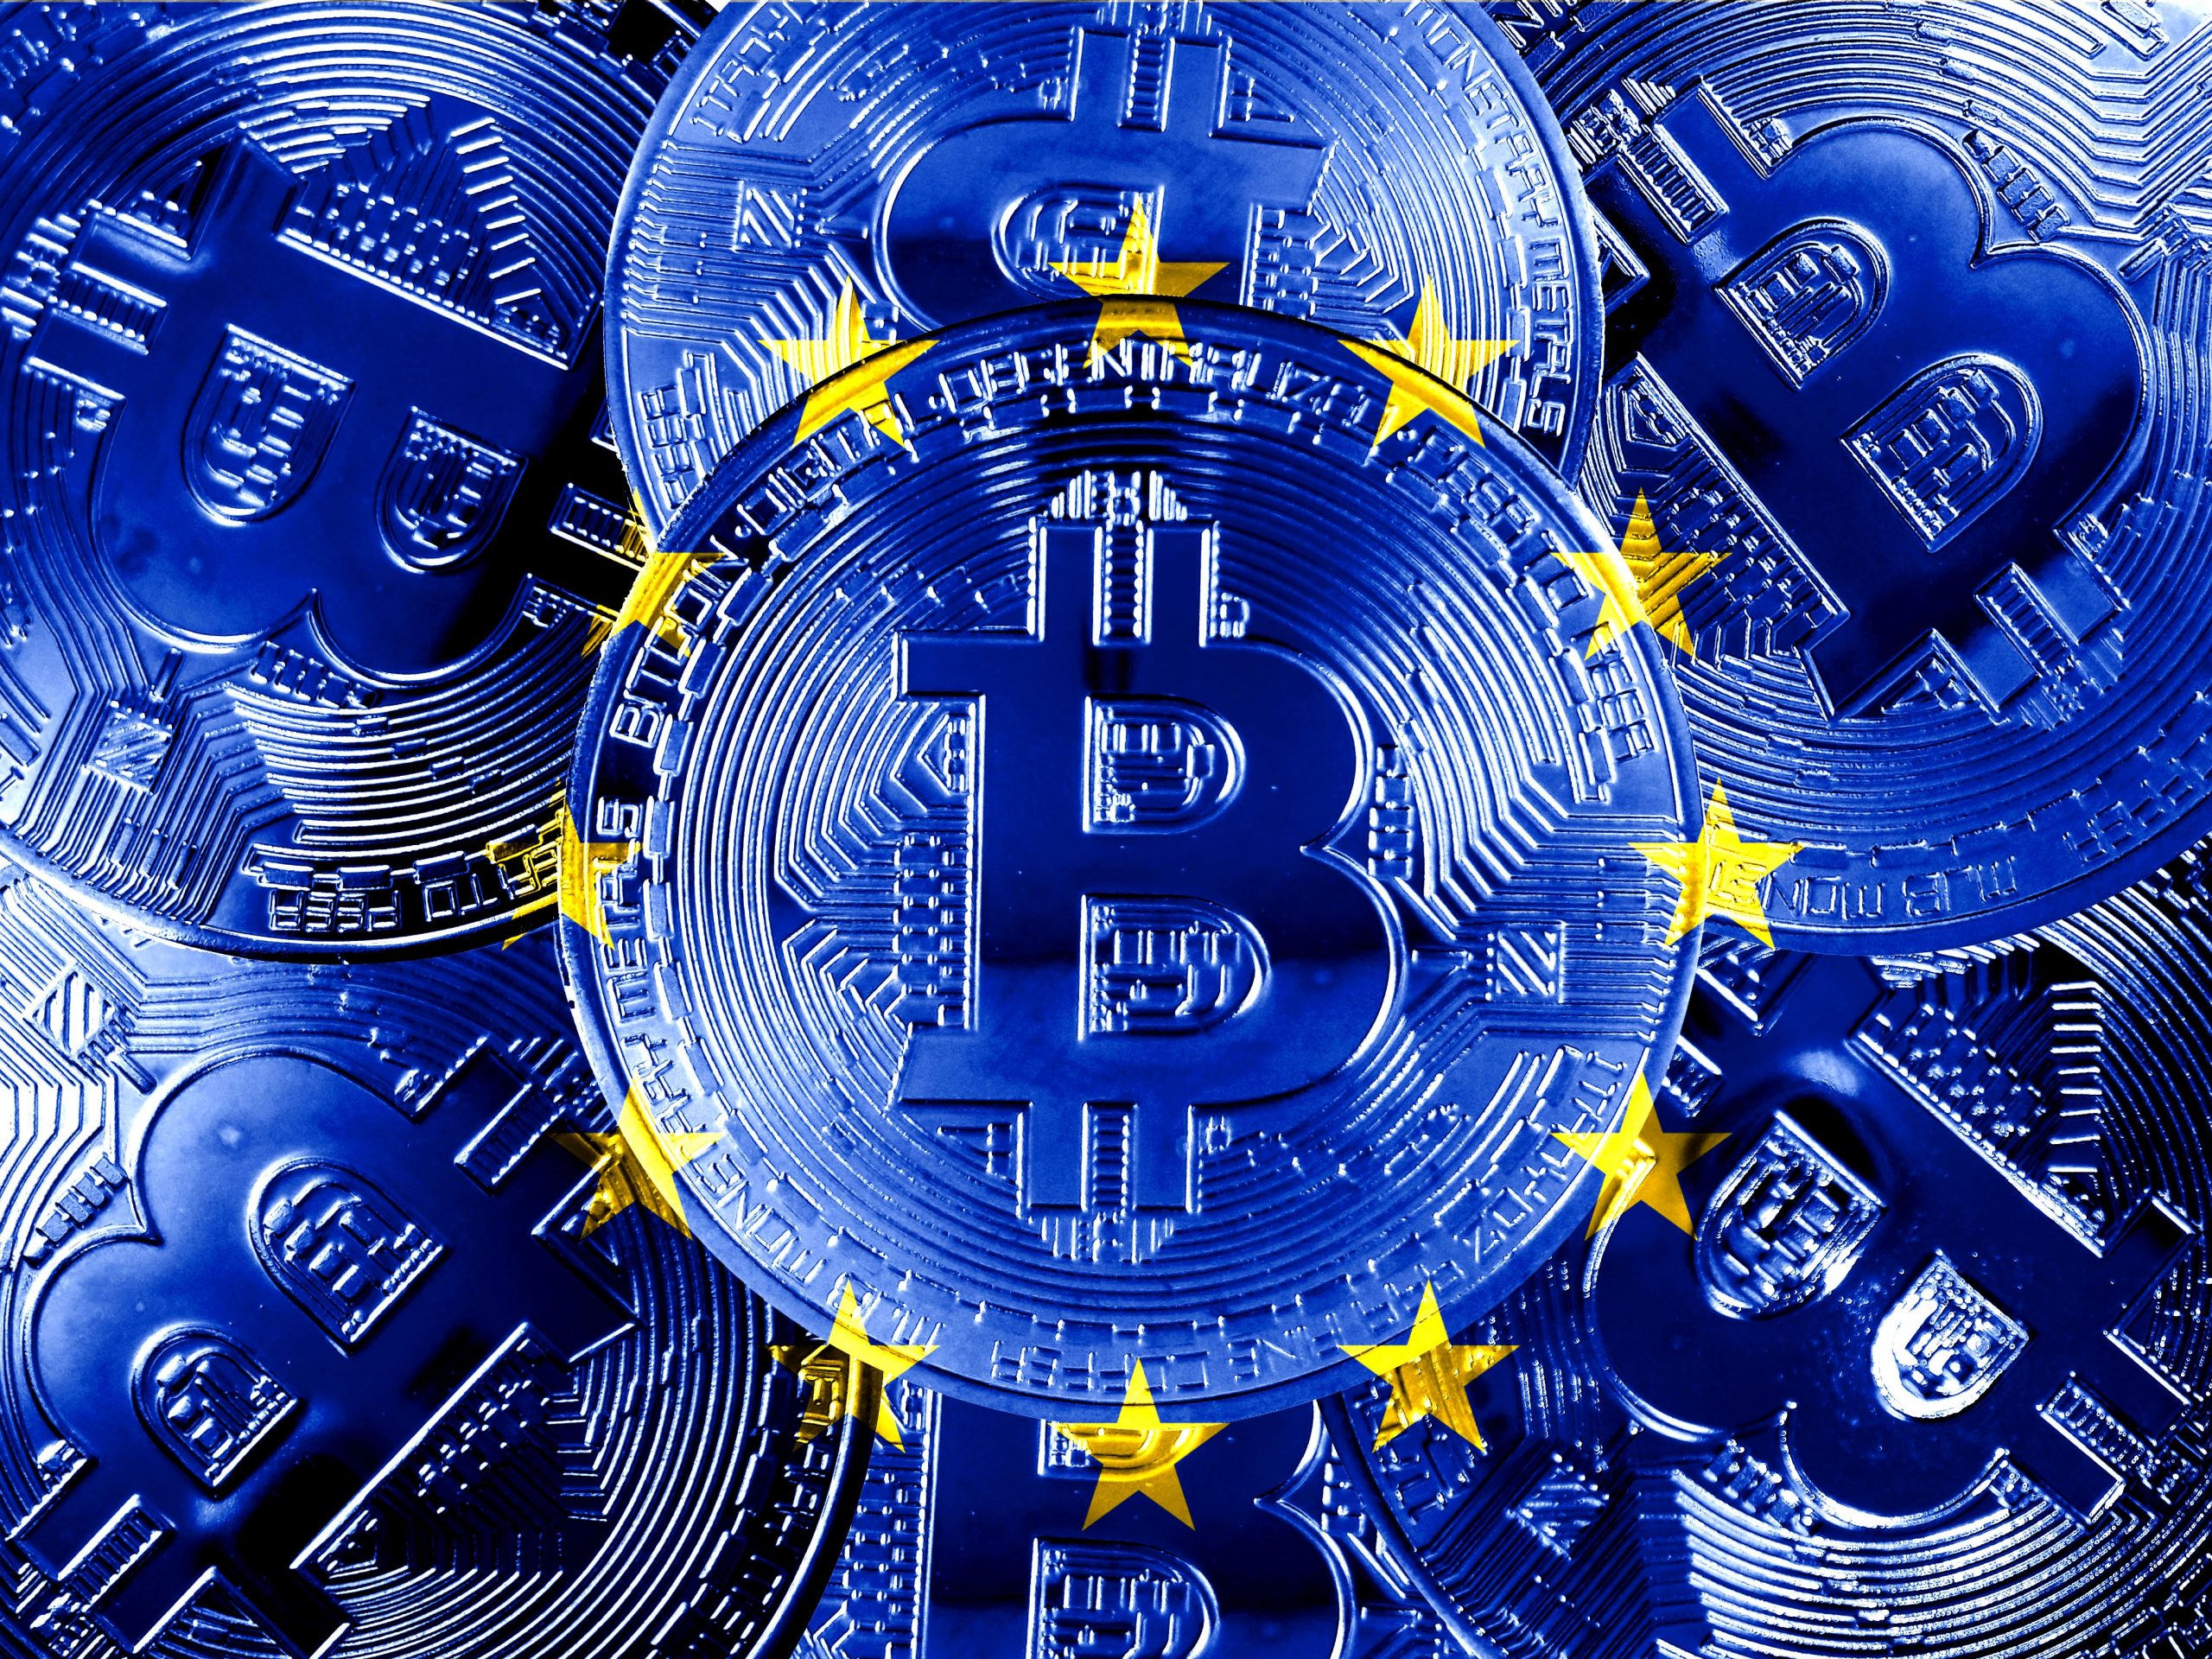 Regulatory overview – EU decides on crypto regulations for BTC, NFTs and Co.